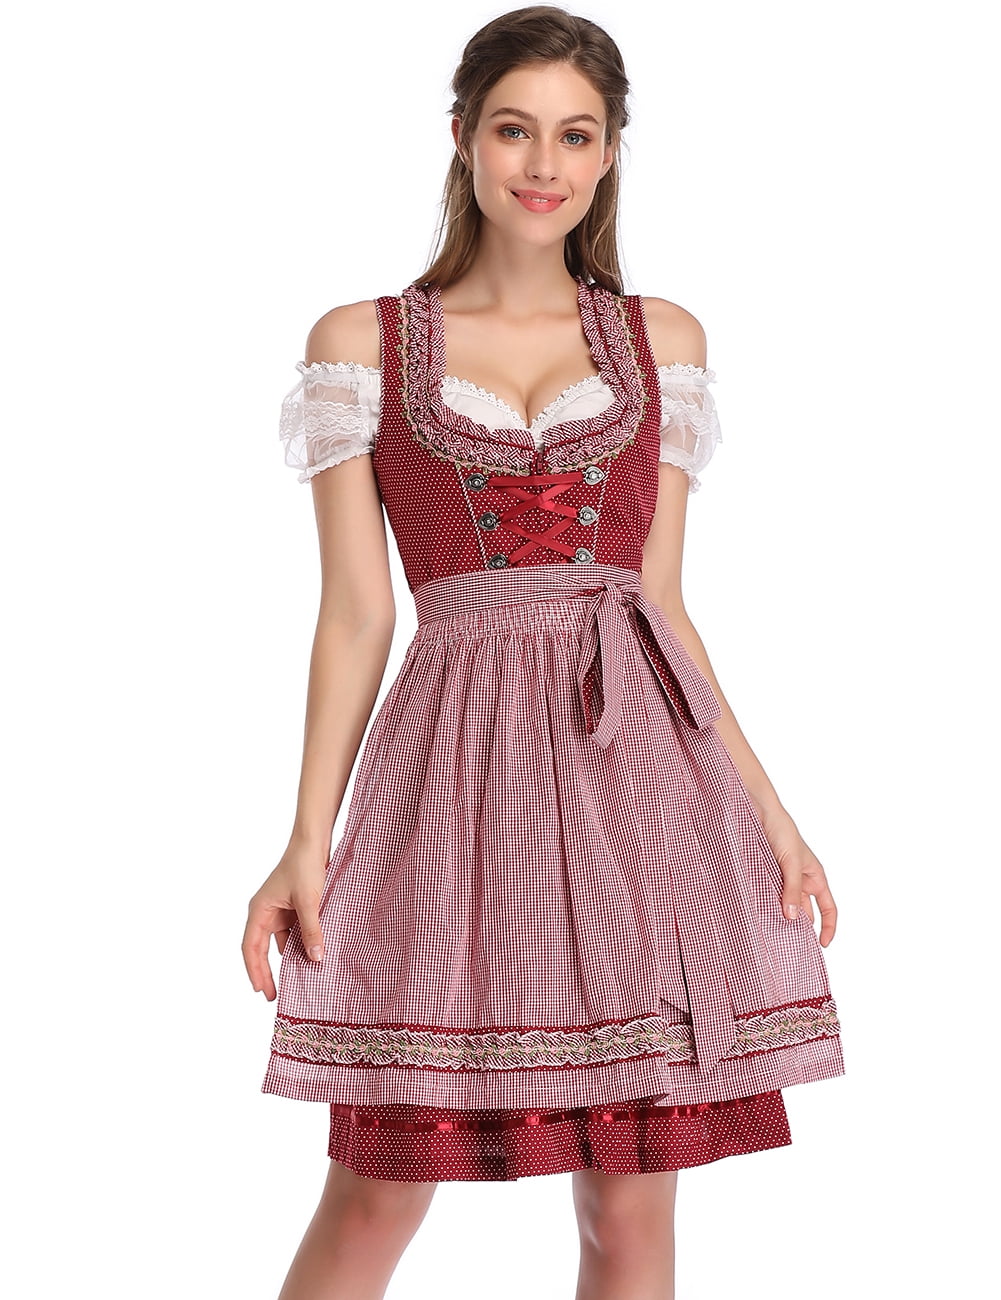 Women's German Dirndl Dress 3 Pcs Bavarian Oktoberfest Costumes for Bavarian Oktoberfest Halloween Carnival Cosplay Party